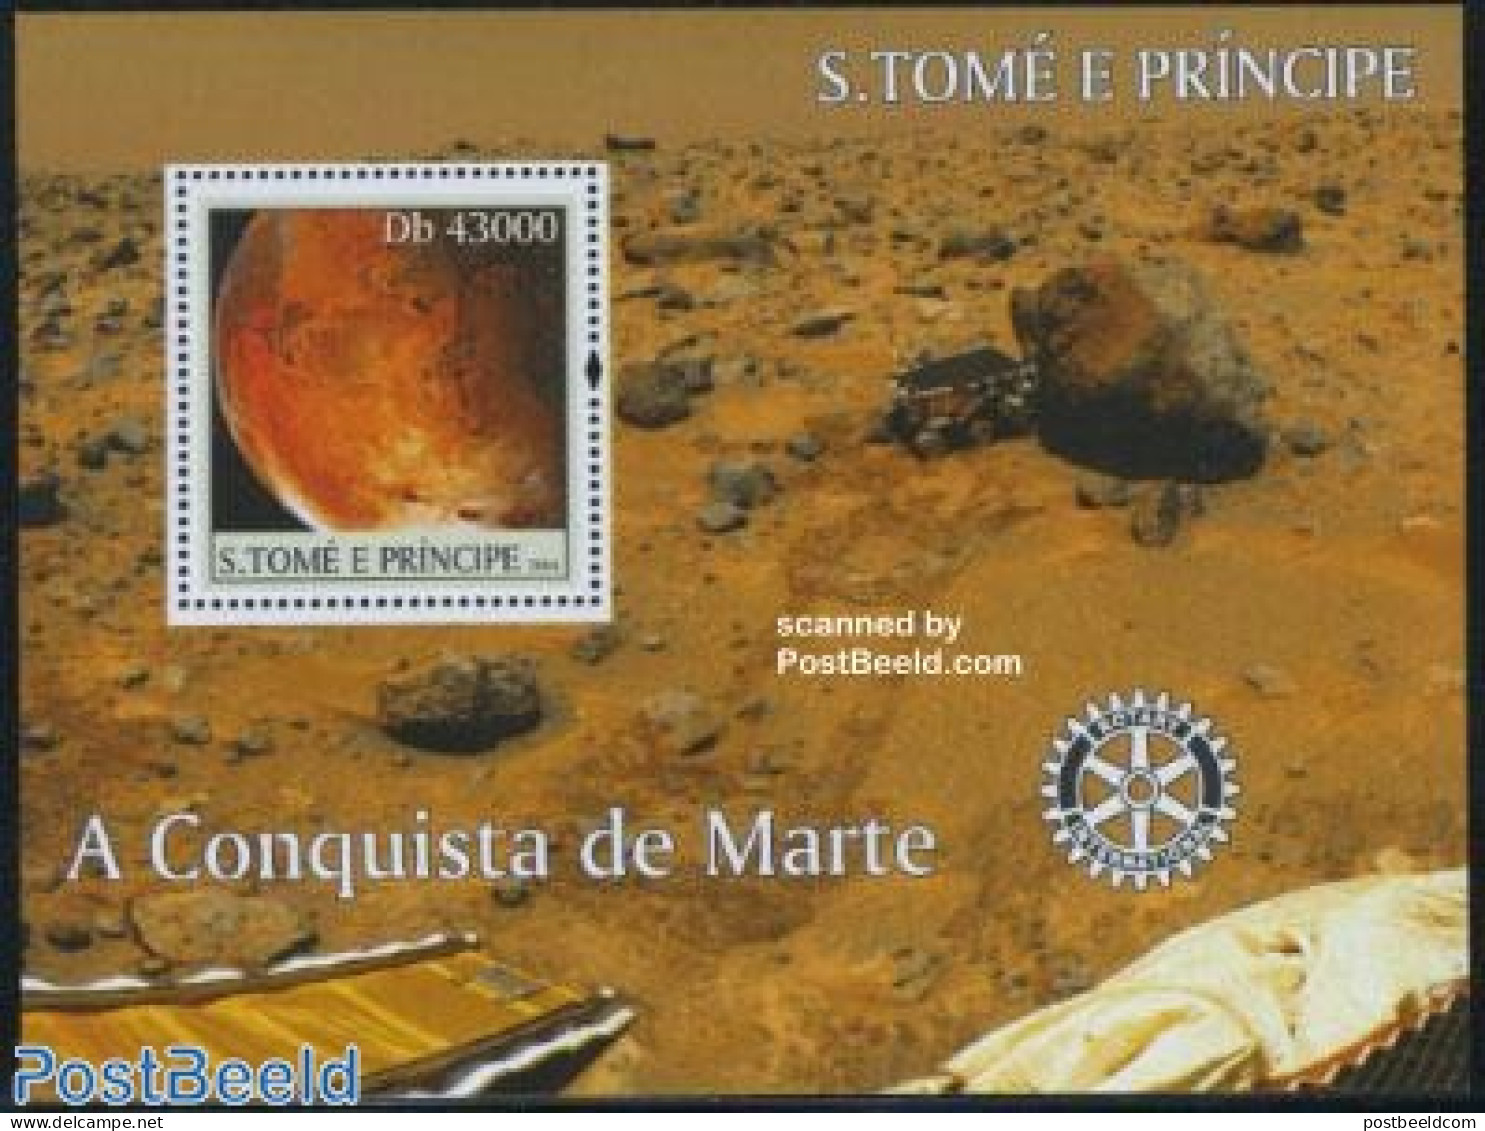 Sao Tome/Principe 2004 Mars Conquest S/s, Mint NH, Transport - Space Exploration - Sao Tome And Principe